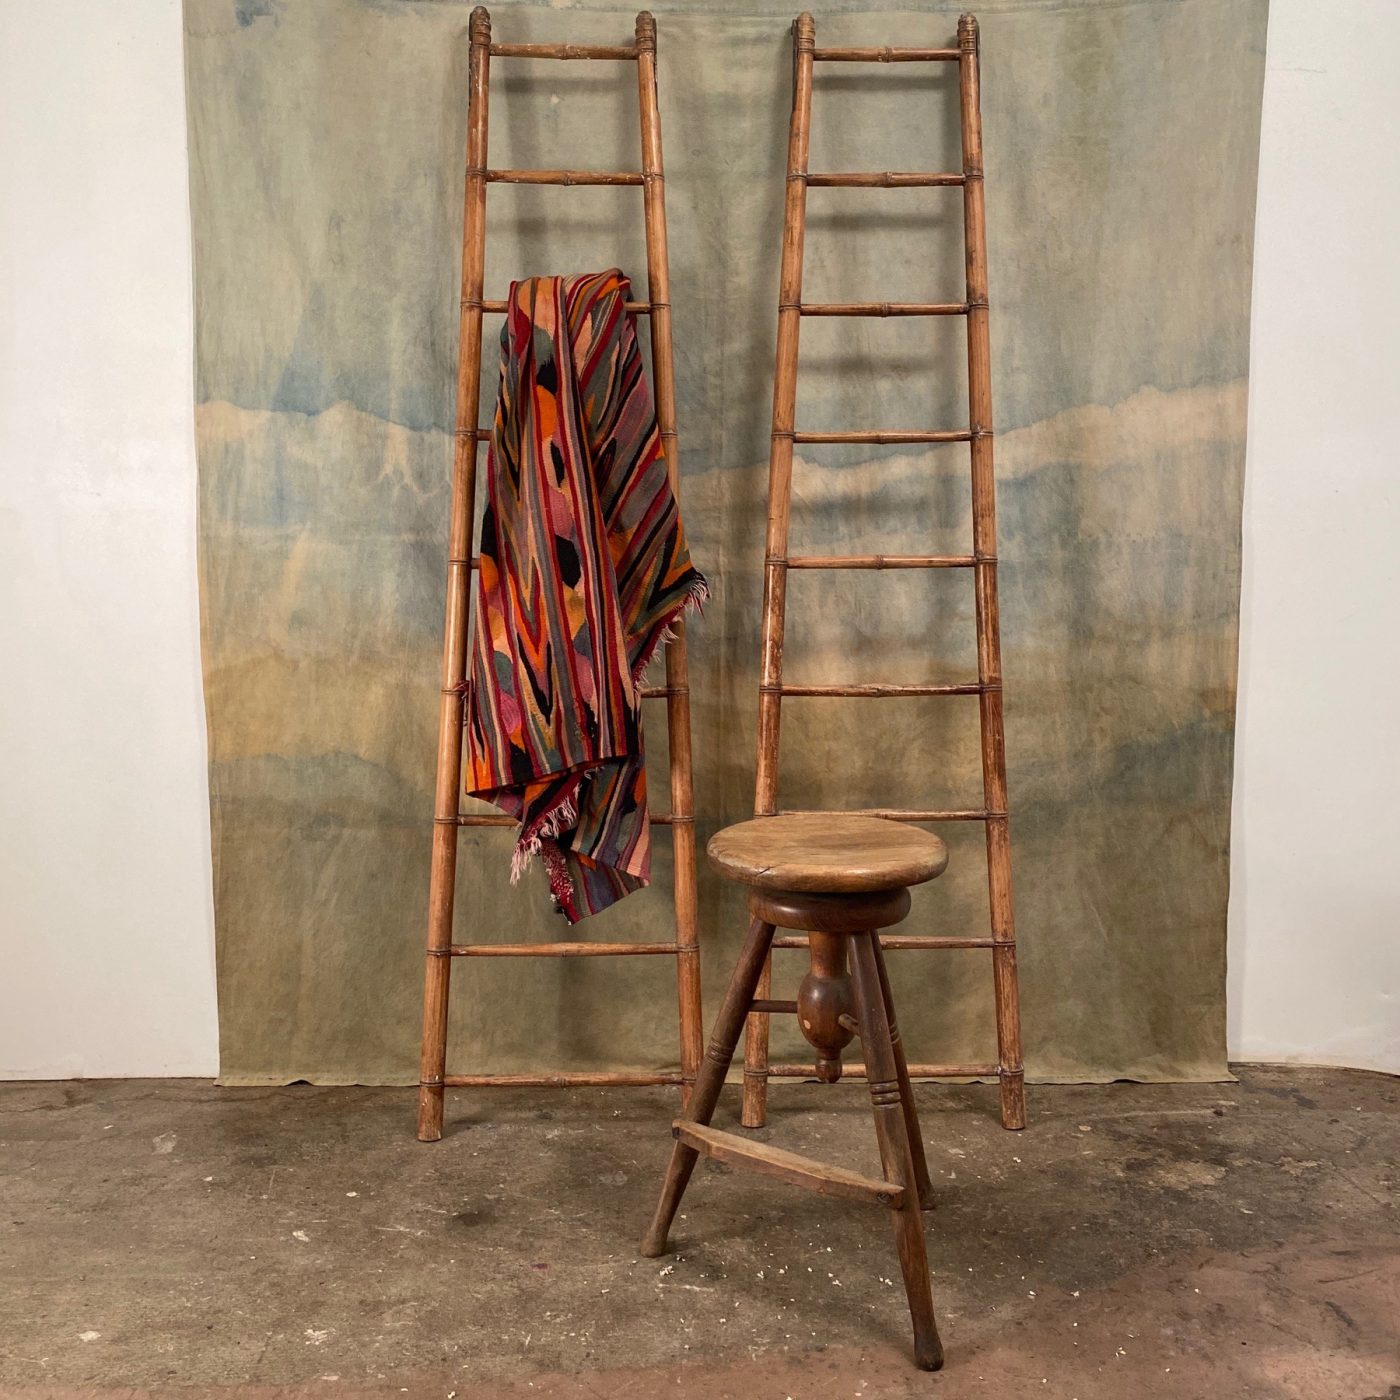 objet-vagabond-bamboo-ladders0003